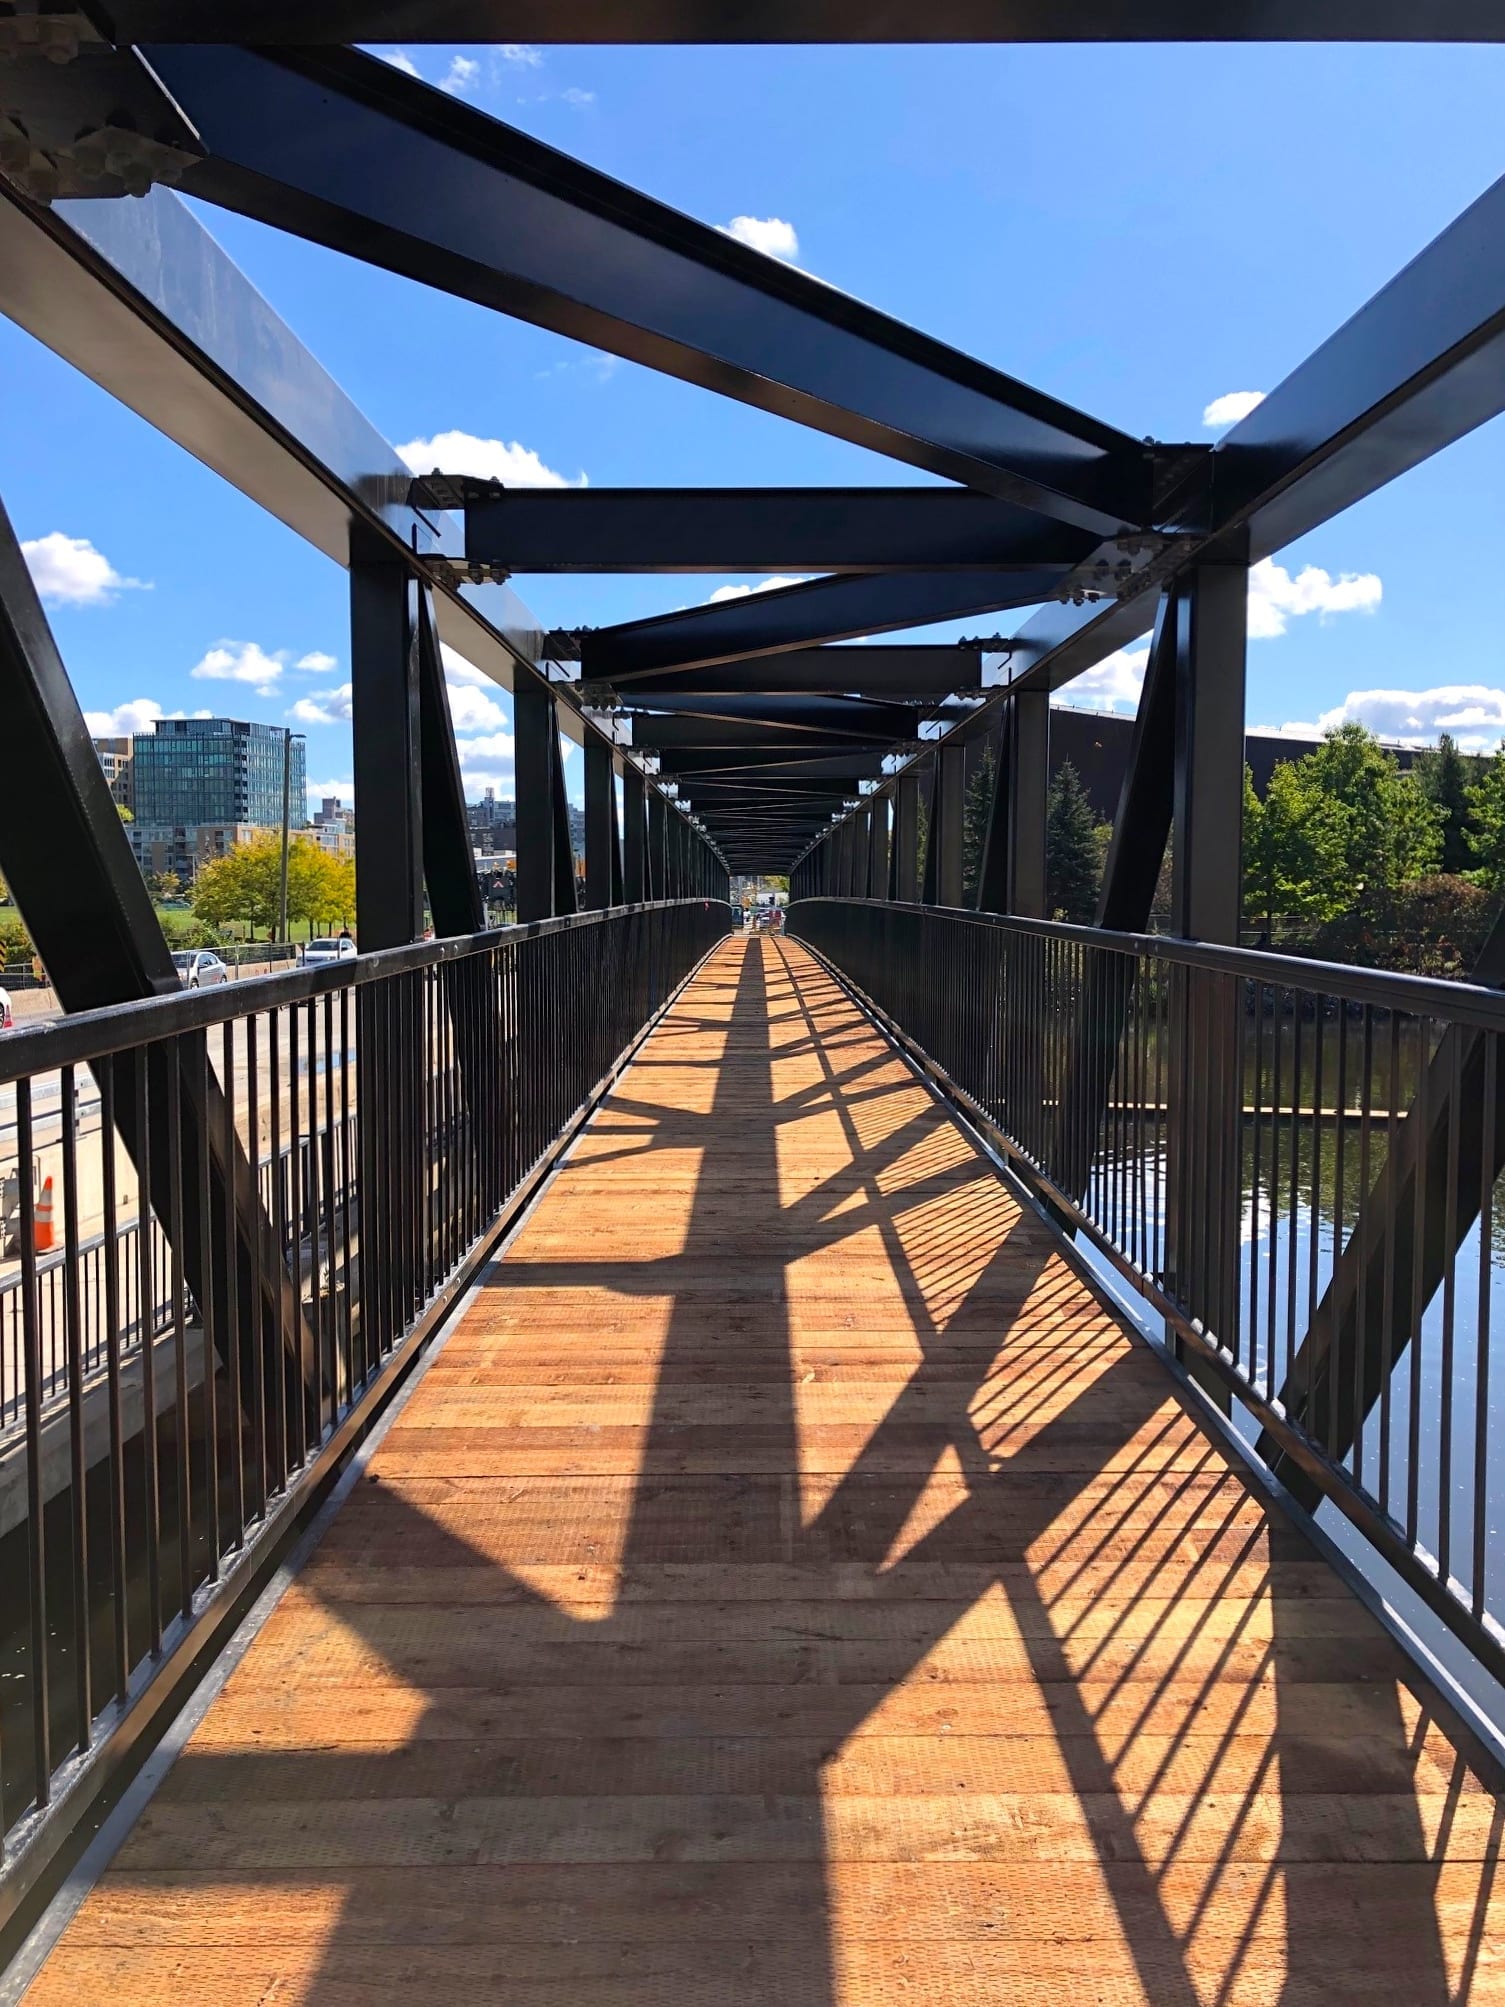 End view of Zibi pedestrian utility bridge in Ottawa